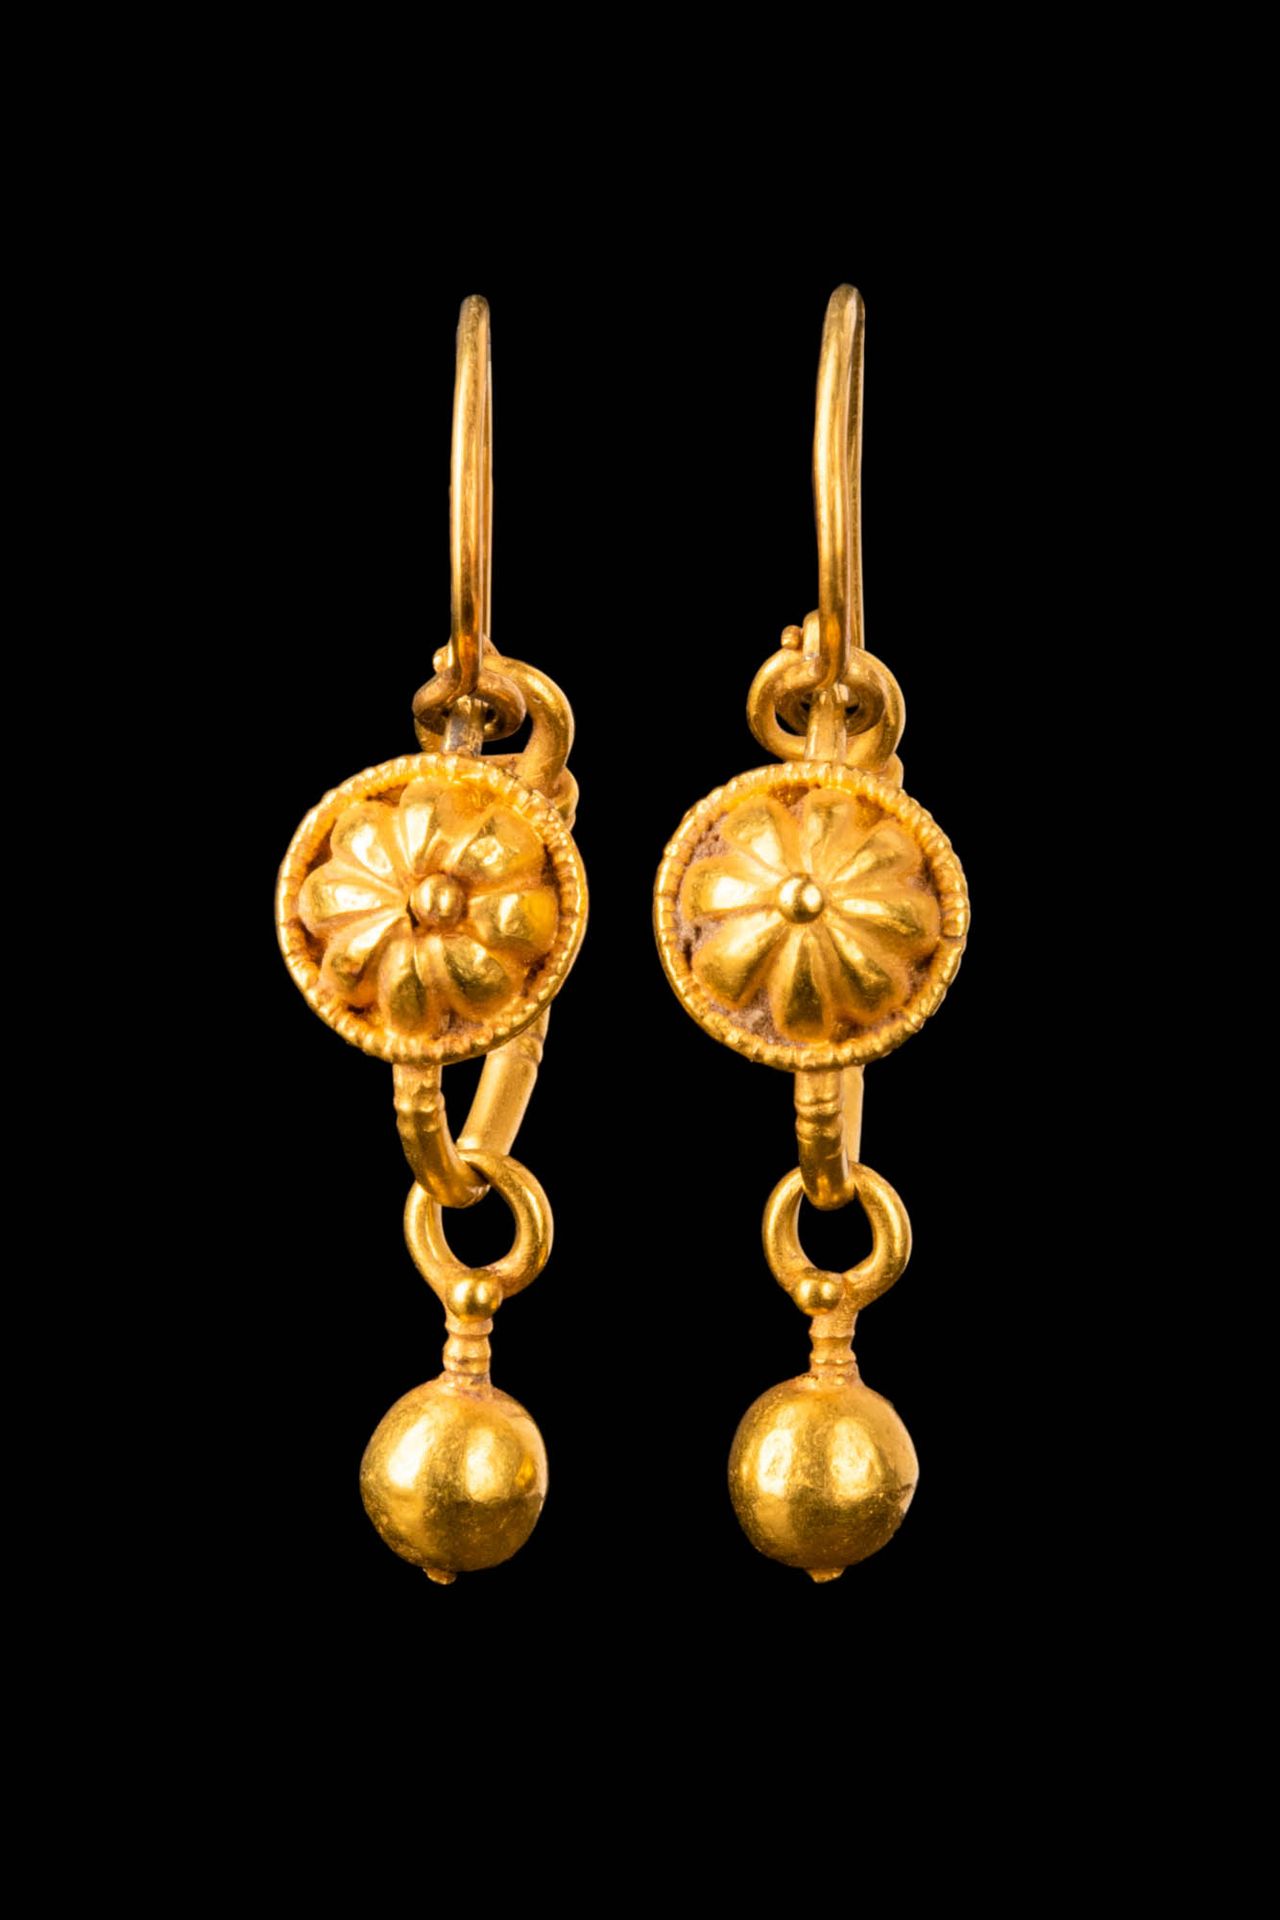 ROMAN GOLD EARRINGS WITH PENDANT 约公元 100 - 200 年。公元 100 - 200 年。
这对罗马金耳环的中心圆盘上饰有&hellip;